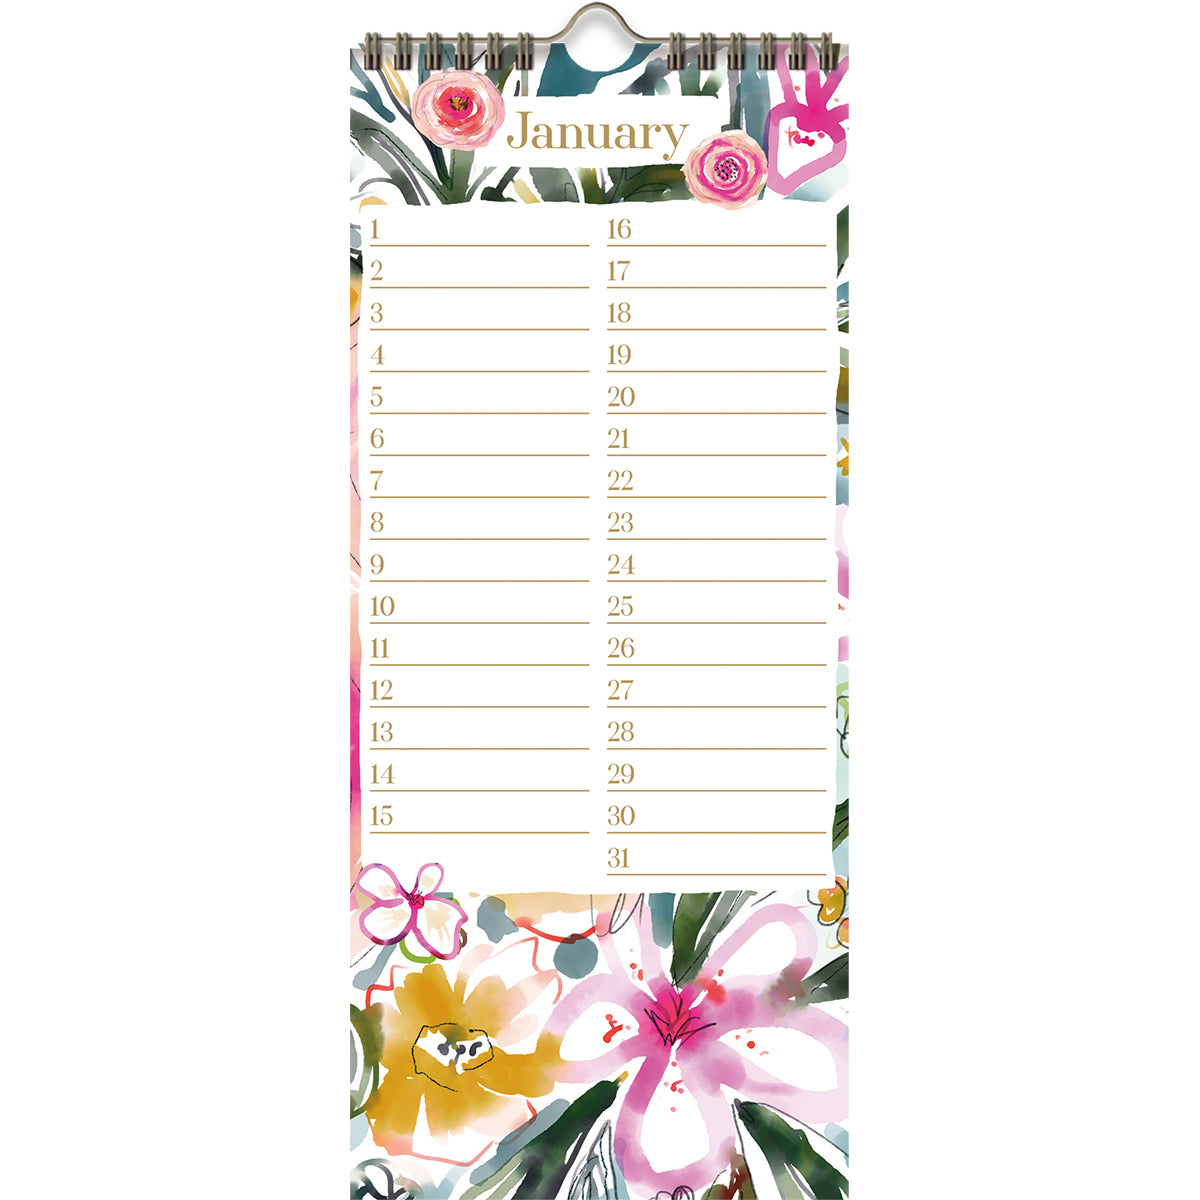 LANG Wild At Heart Special Date Organizer - Perpetual Slim Wall Calendar